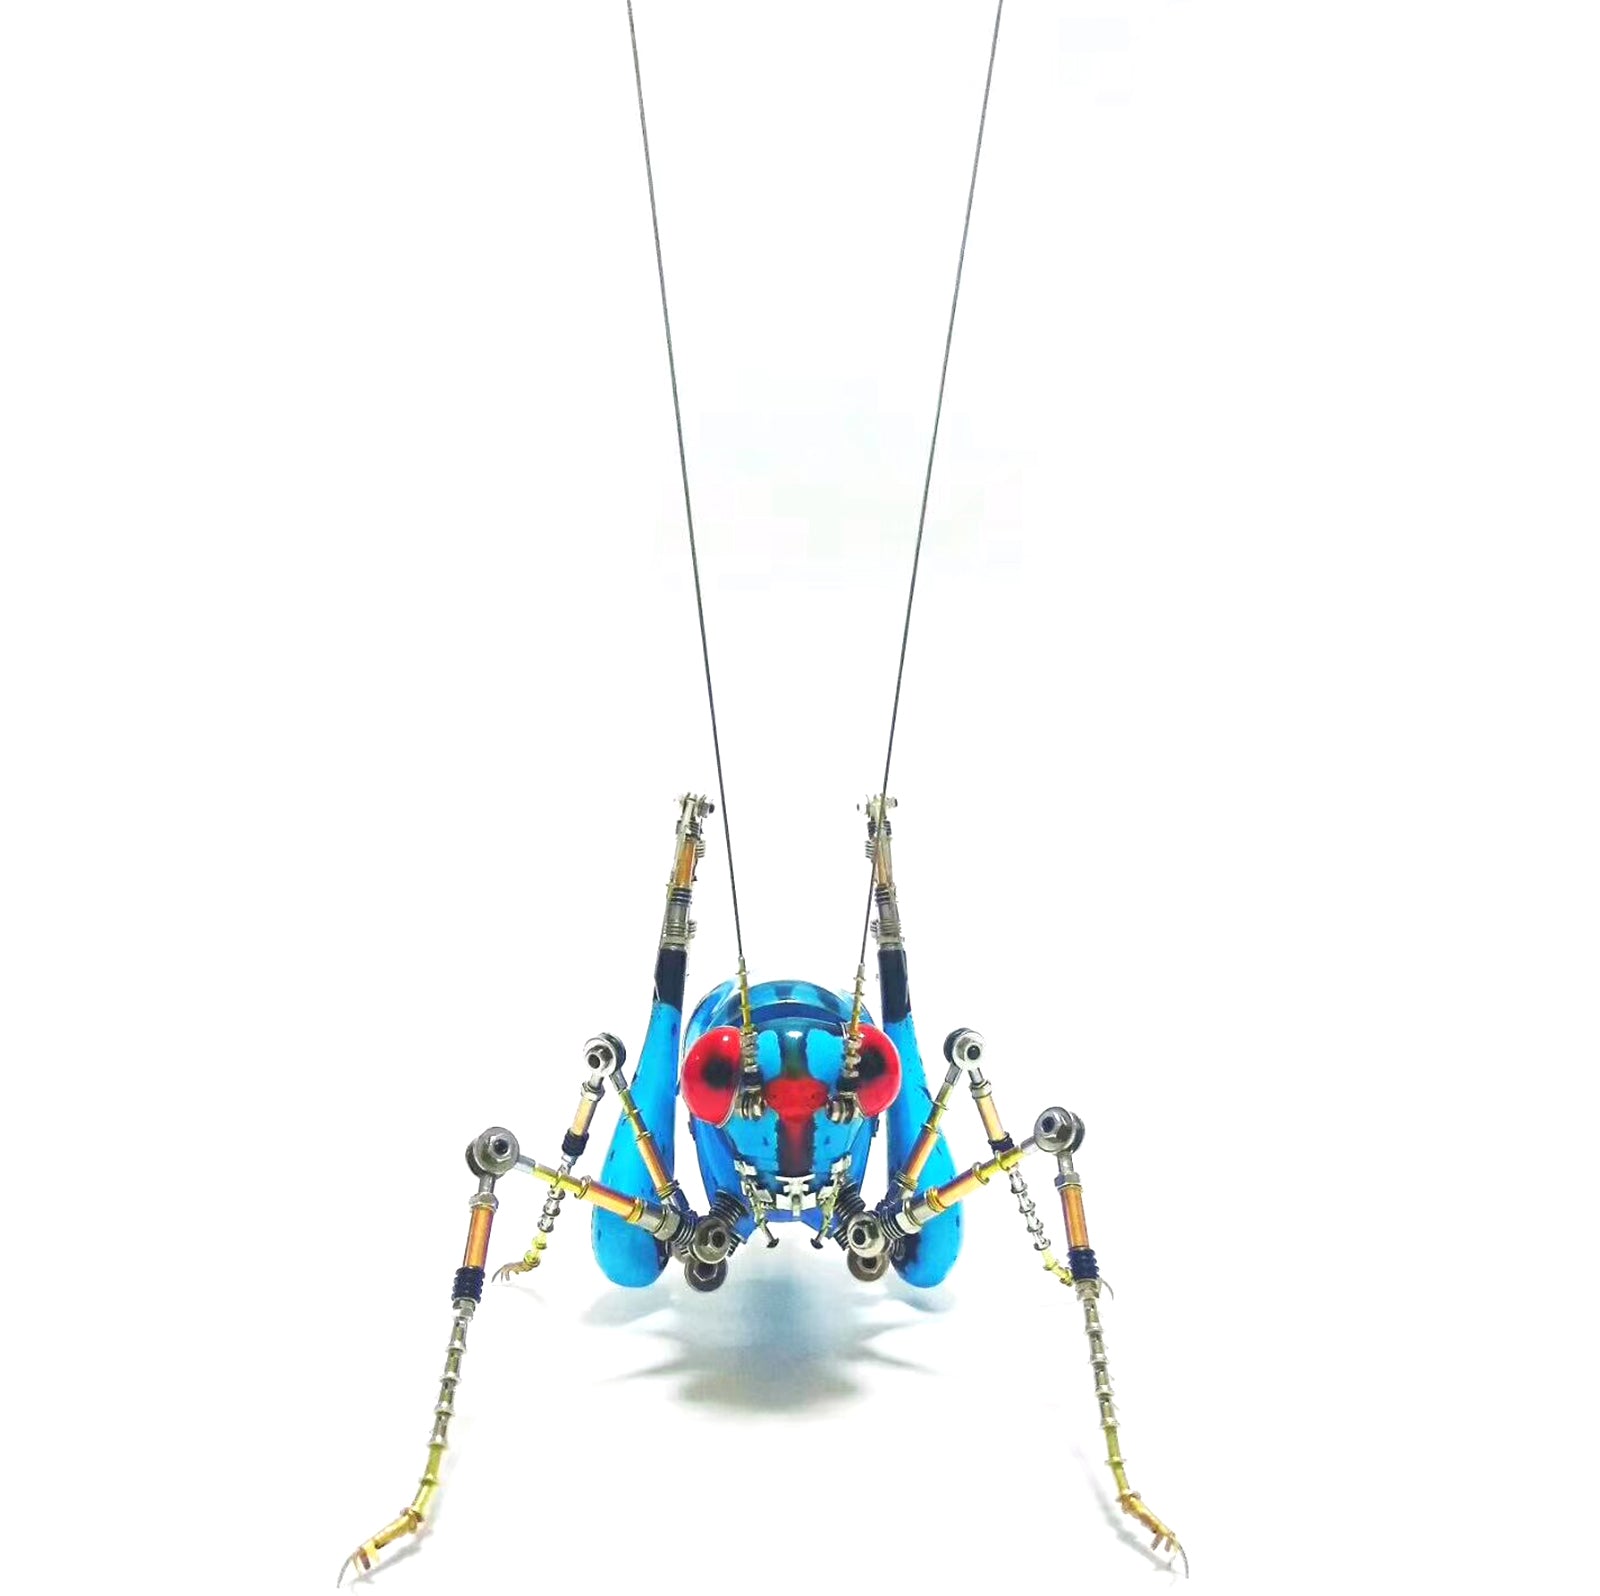 Steampunk Blue Grasshopper Model Sculpture Bug Insect 3D Metal Assembled Crafts